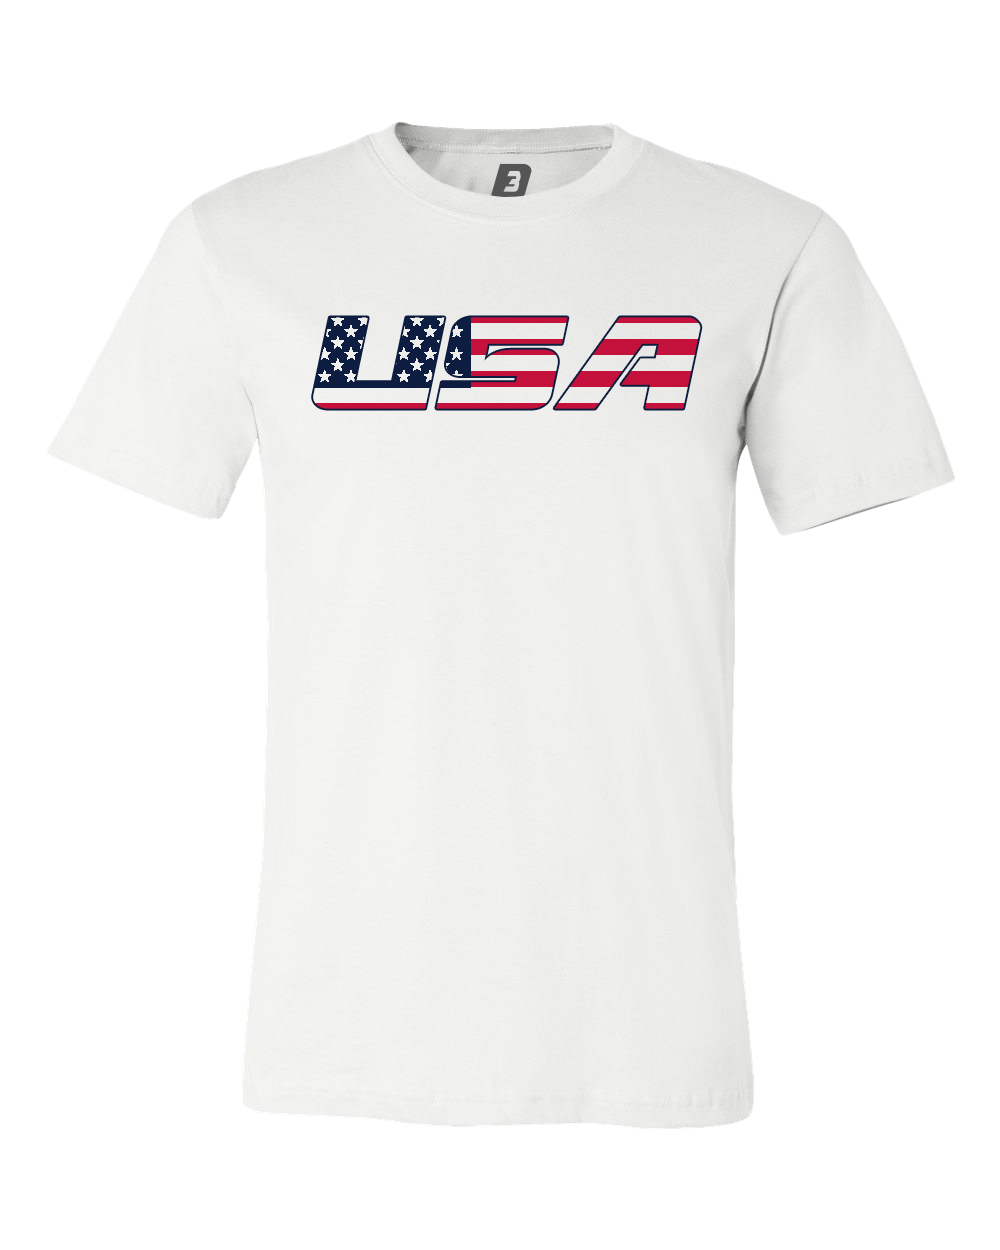 USA T-Shirt (Men's/Unisex)